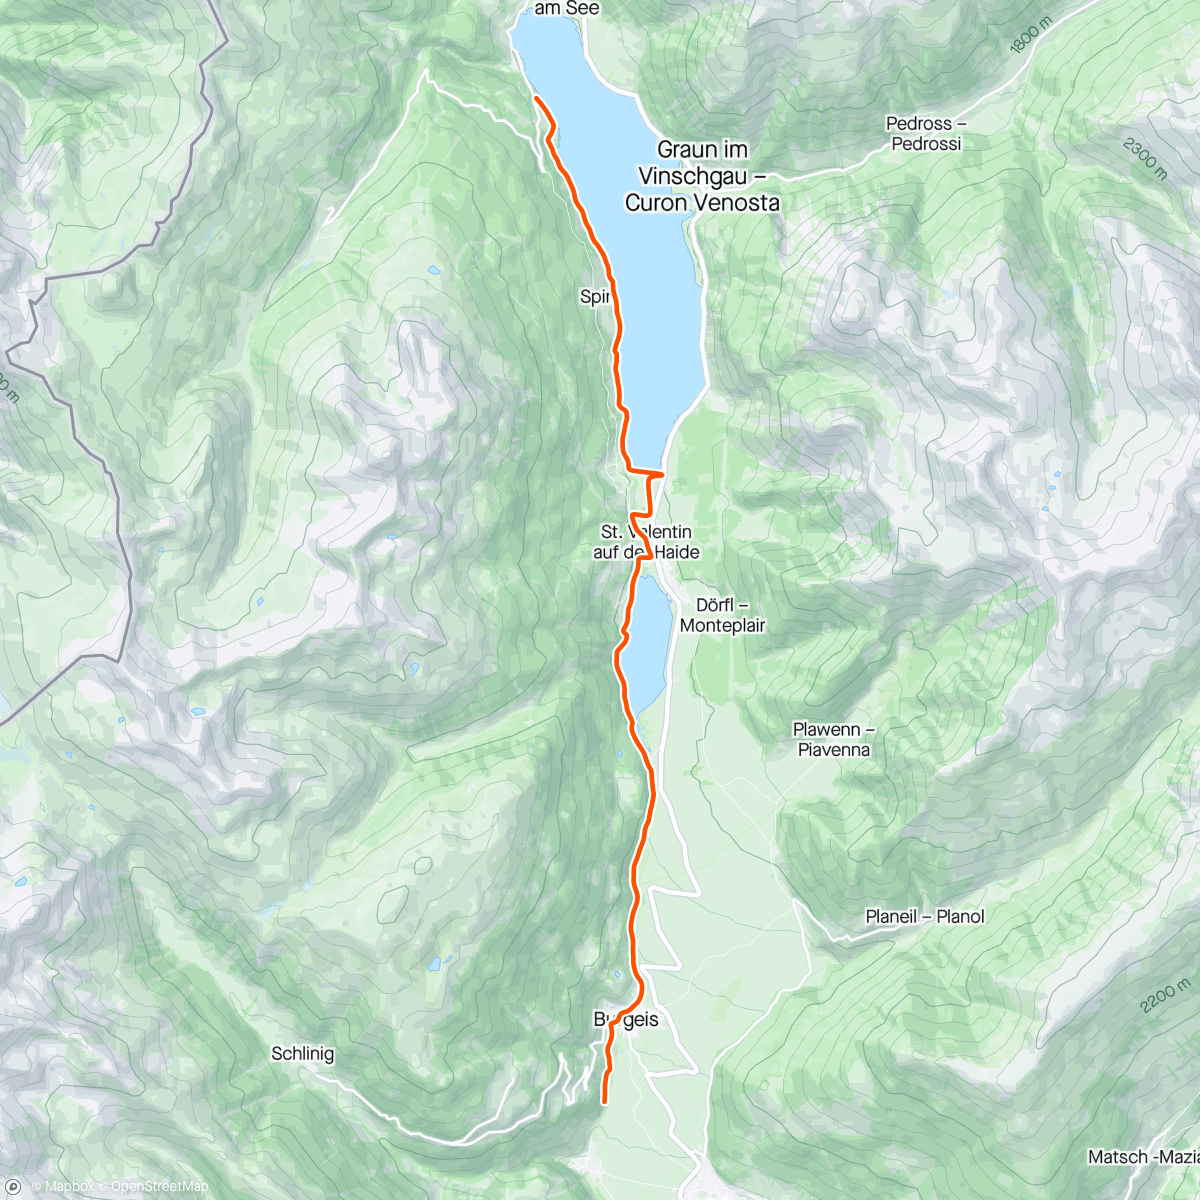 Карта физической активности (Kinomap - 30 minute Ultimate Indoor Cycling Workout Alps South Tyrol Lake Tour 2020 Garmin Ultra HD Video)